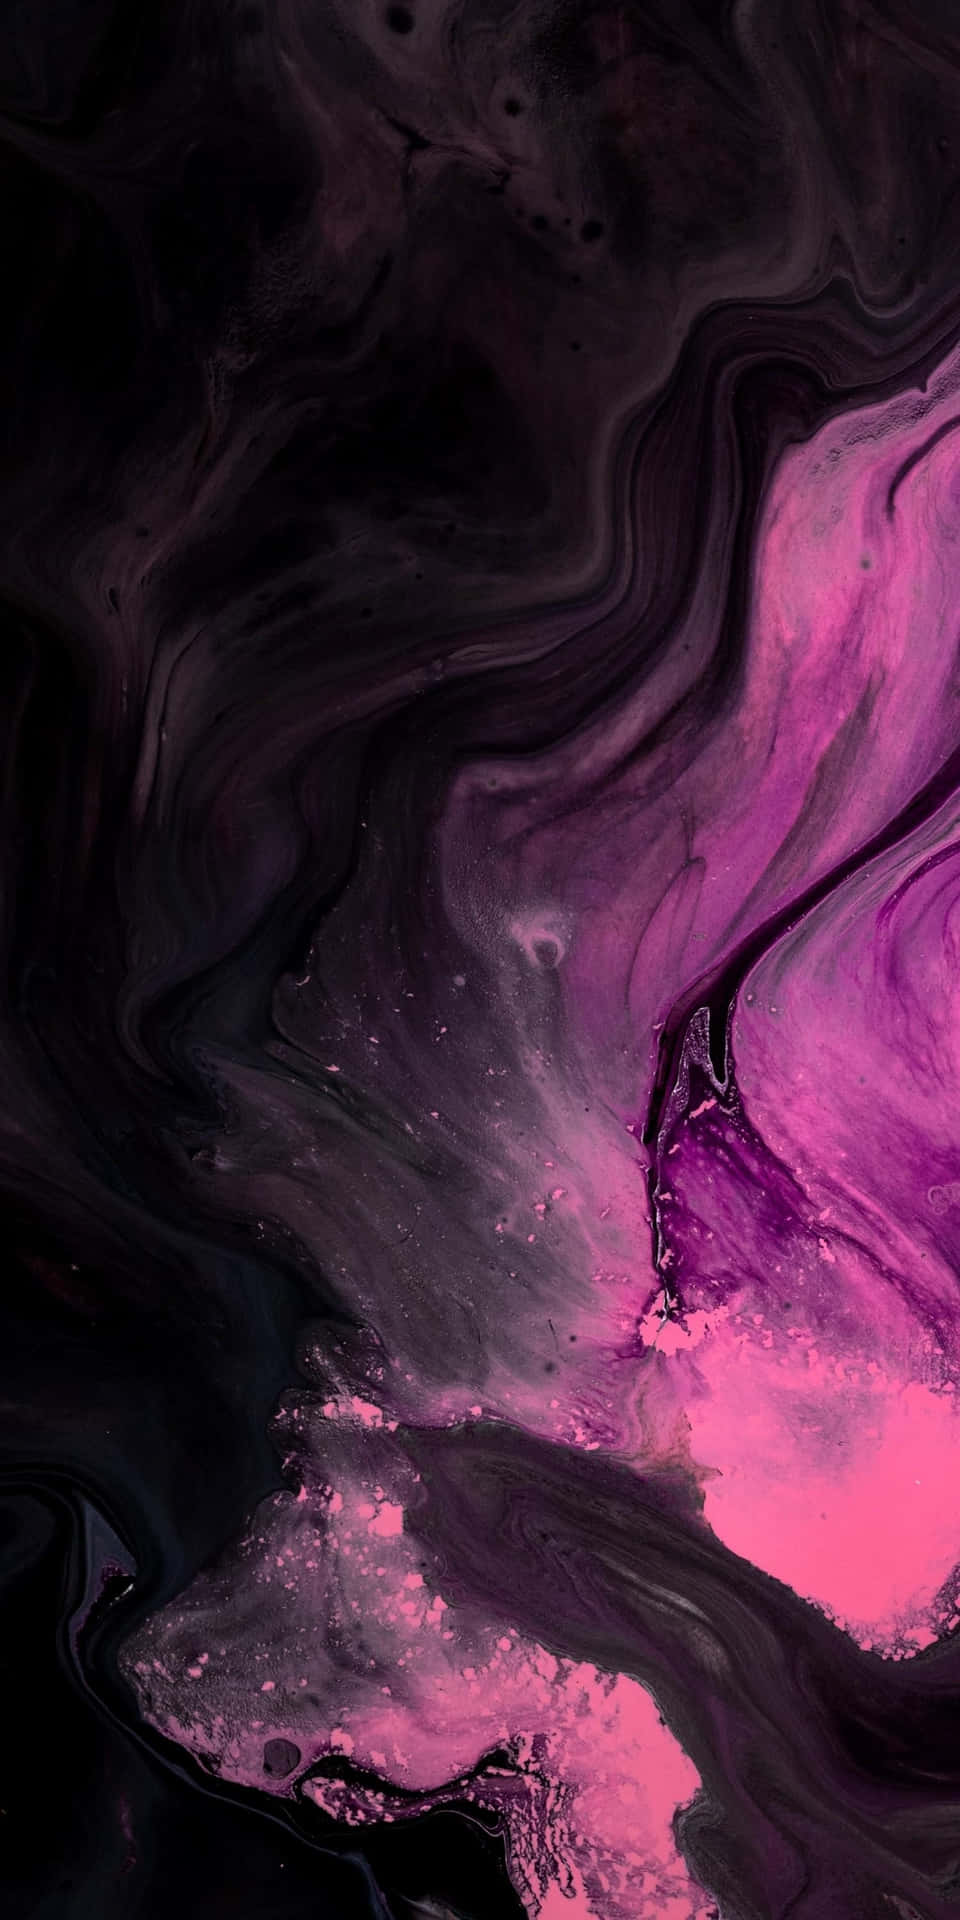 Schwarzesund Pinkes Iphone-marmor-kunstwerk Wallpaper